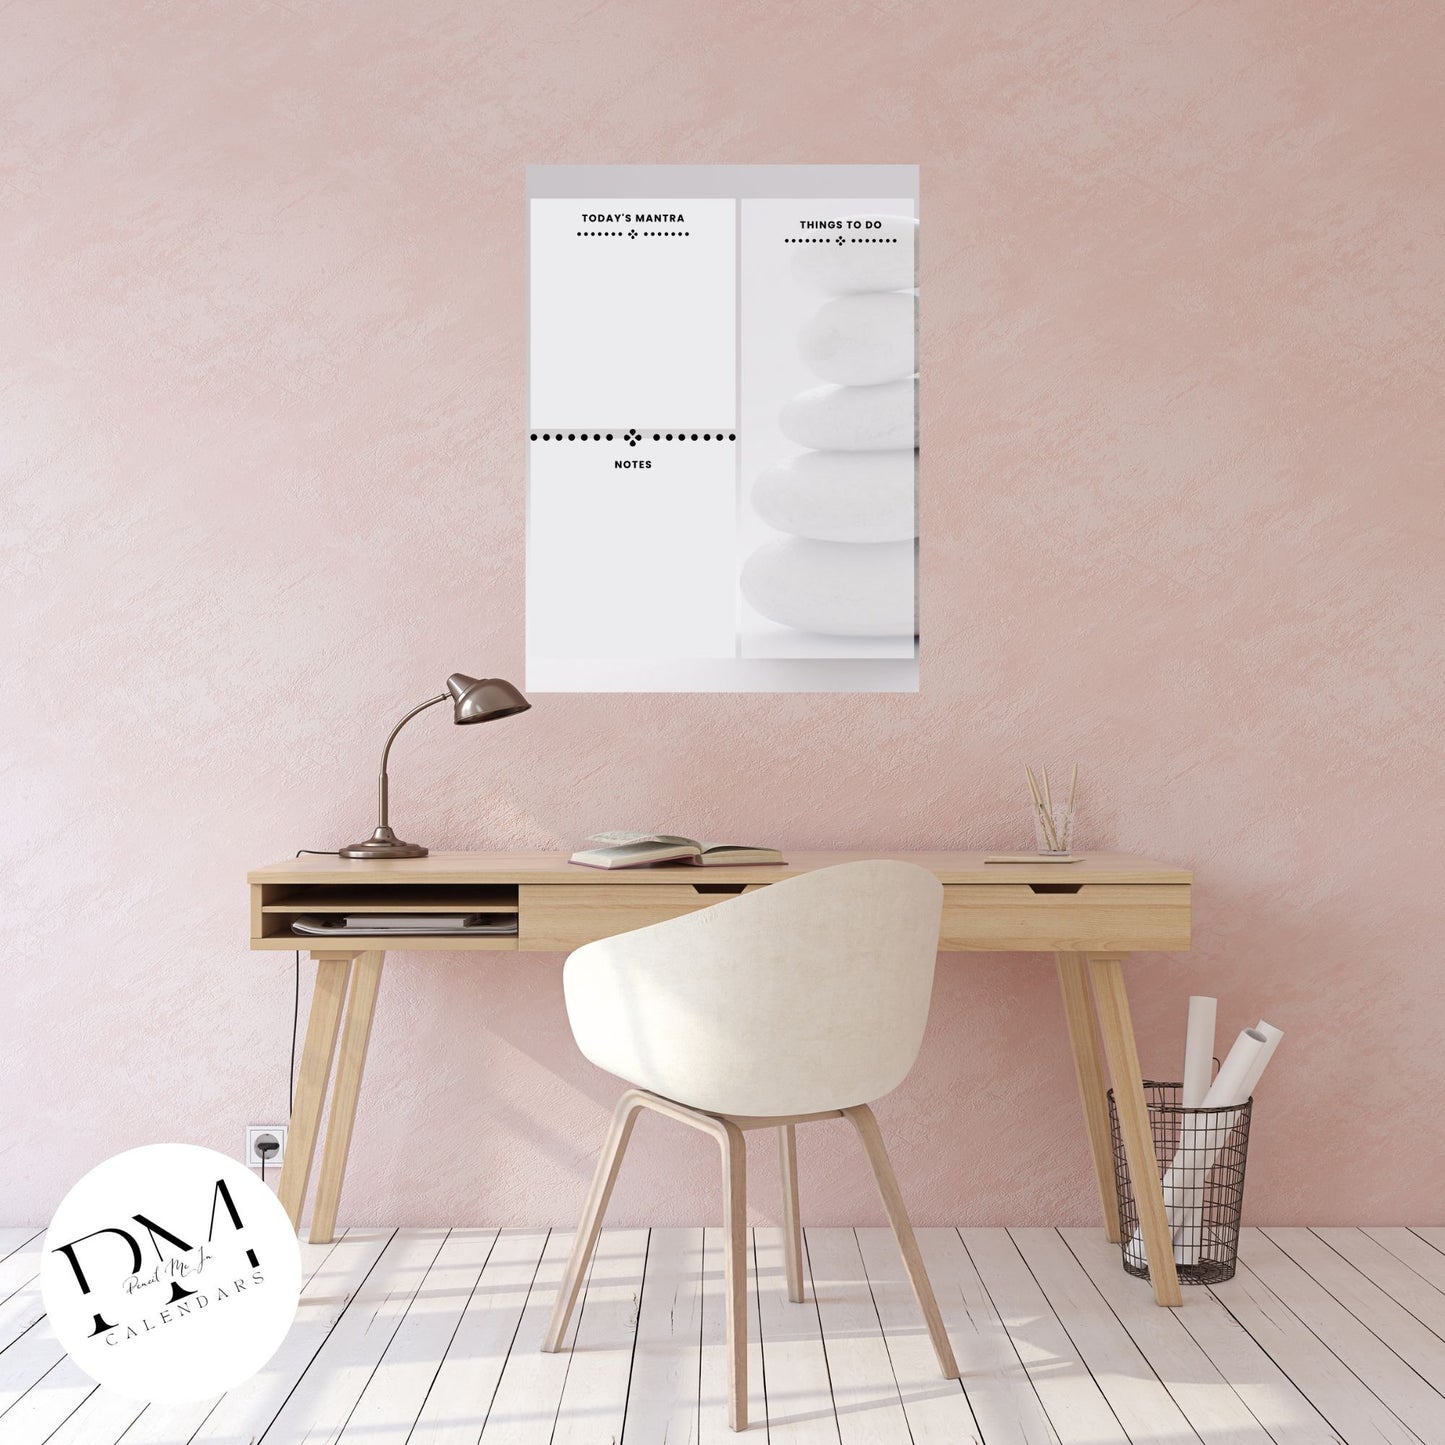 Acrylic Wall Calendar, Self Care Calendar, Daily Wall Calendar, Family Home Planner, Task Organizer, Note Board, Zen Style